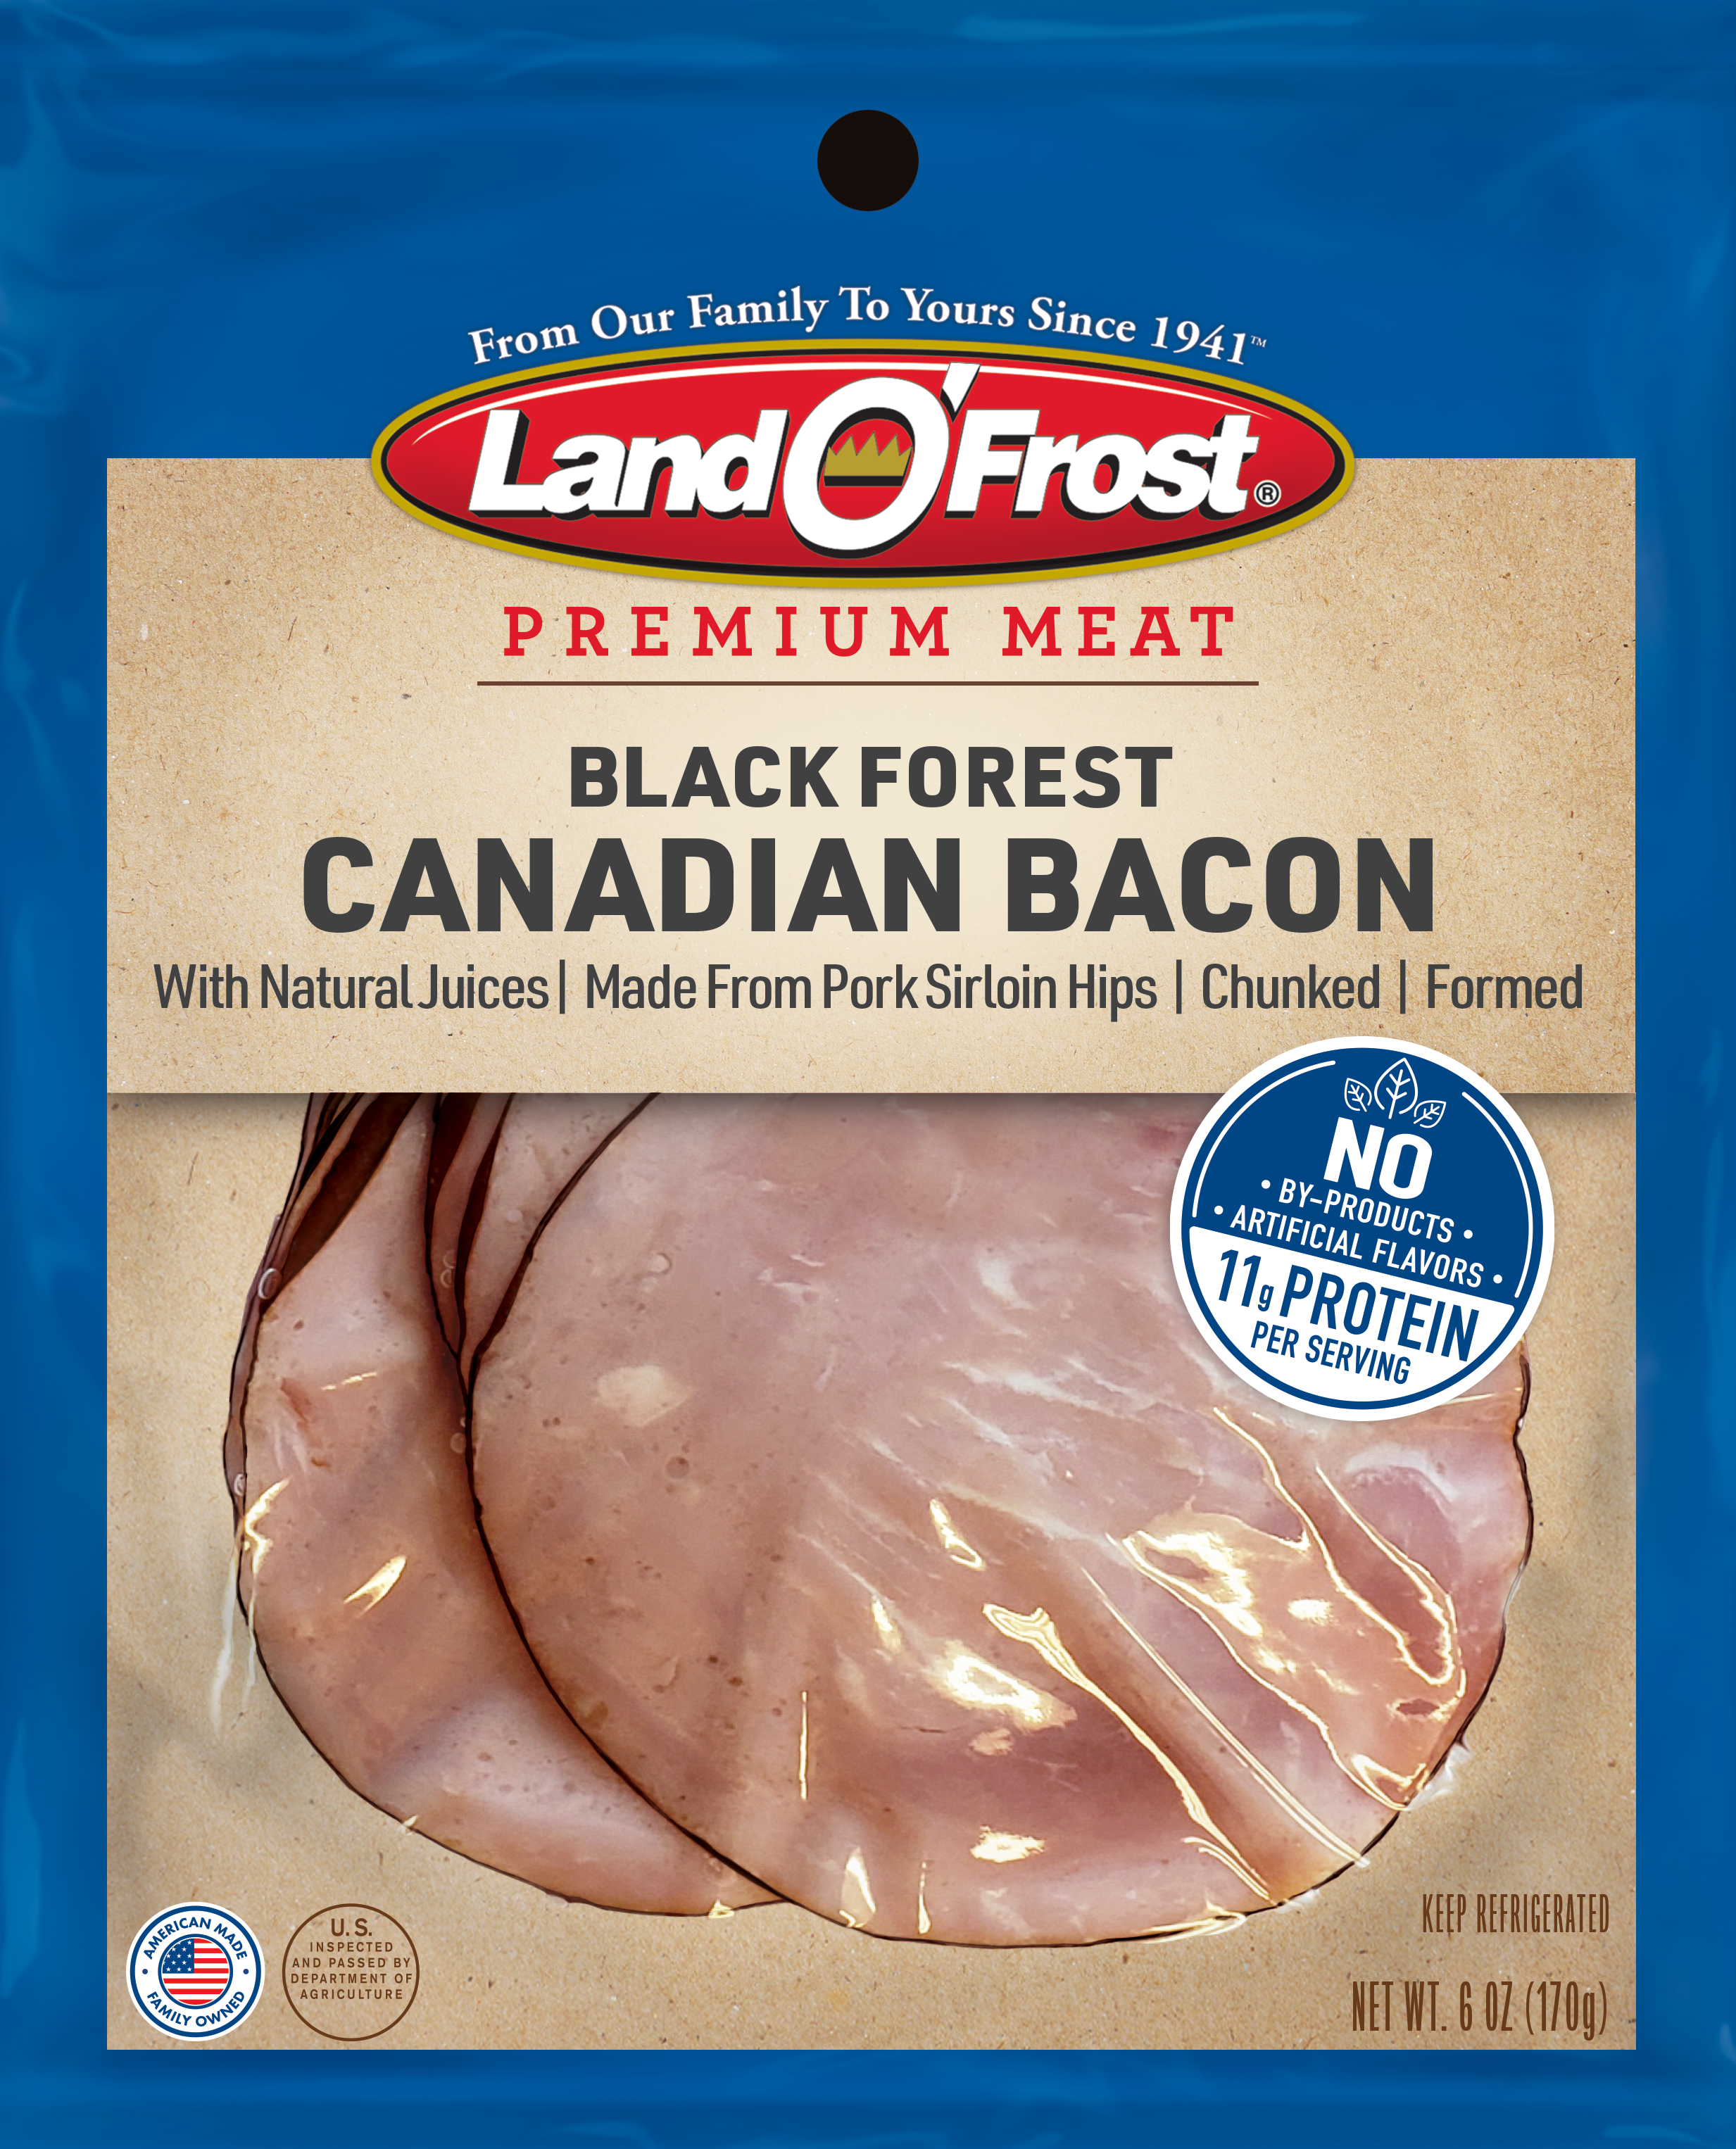 Premium - Black Forest Canadian Bacon